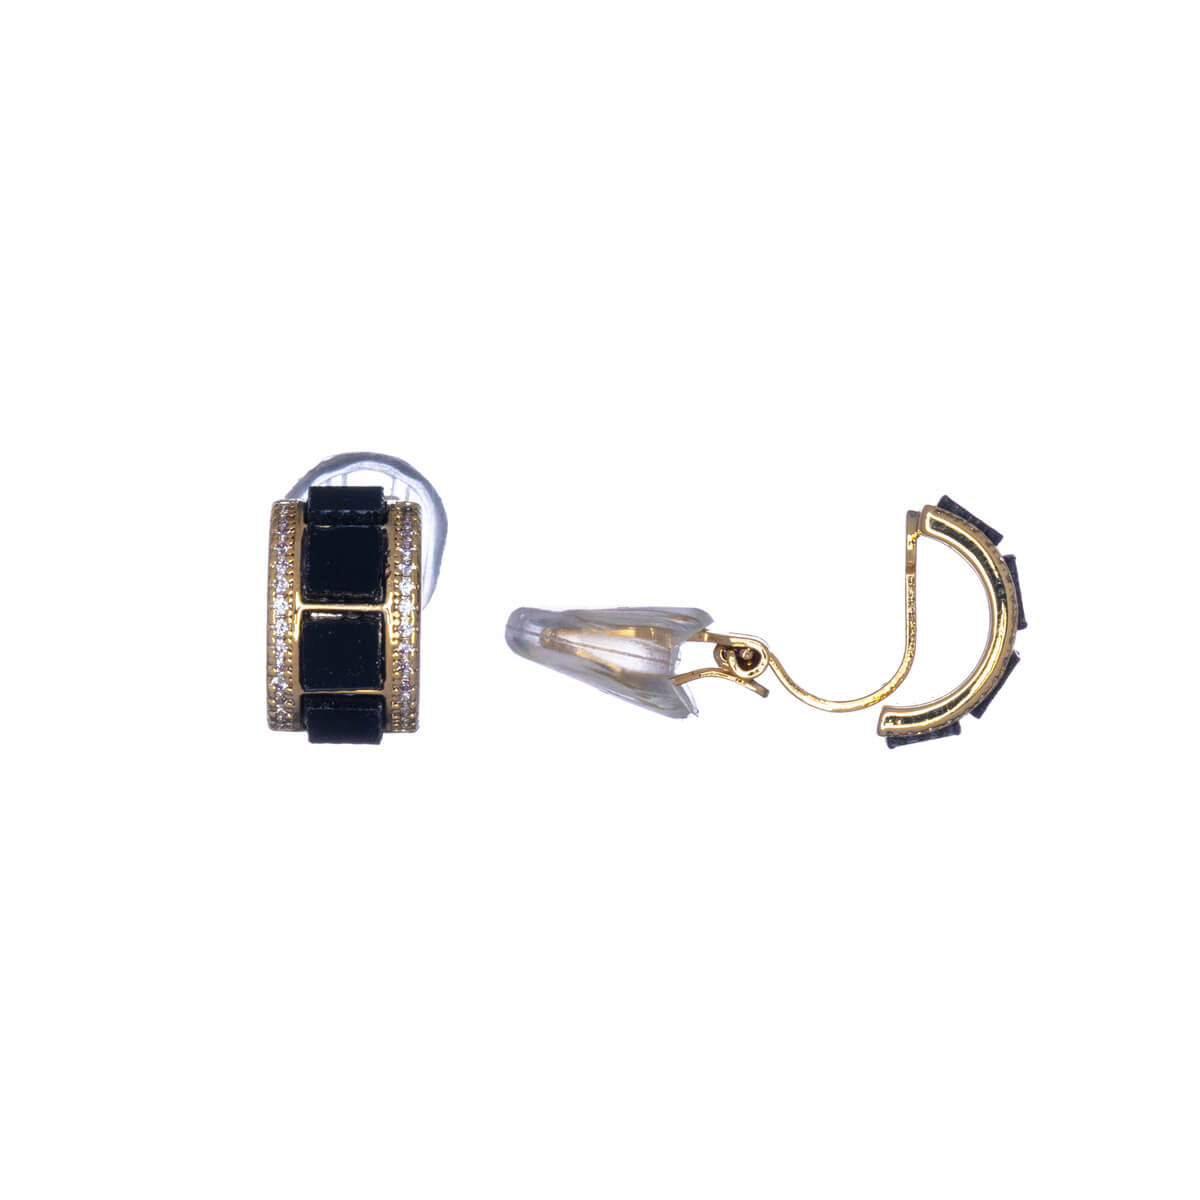 Small earrings clip earrings with zirconia stones